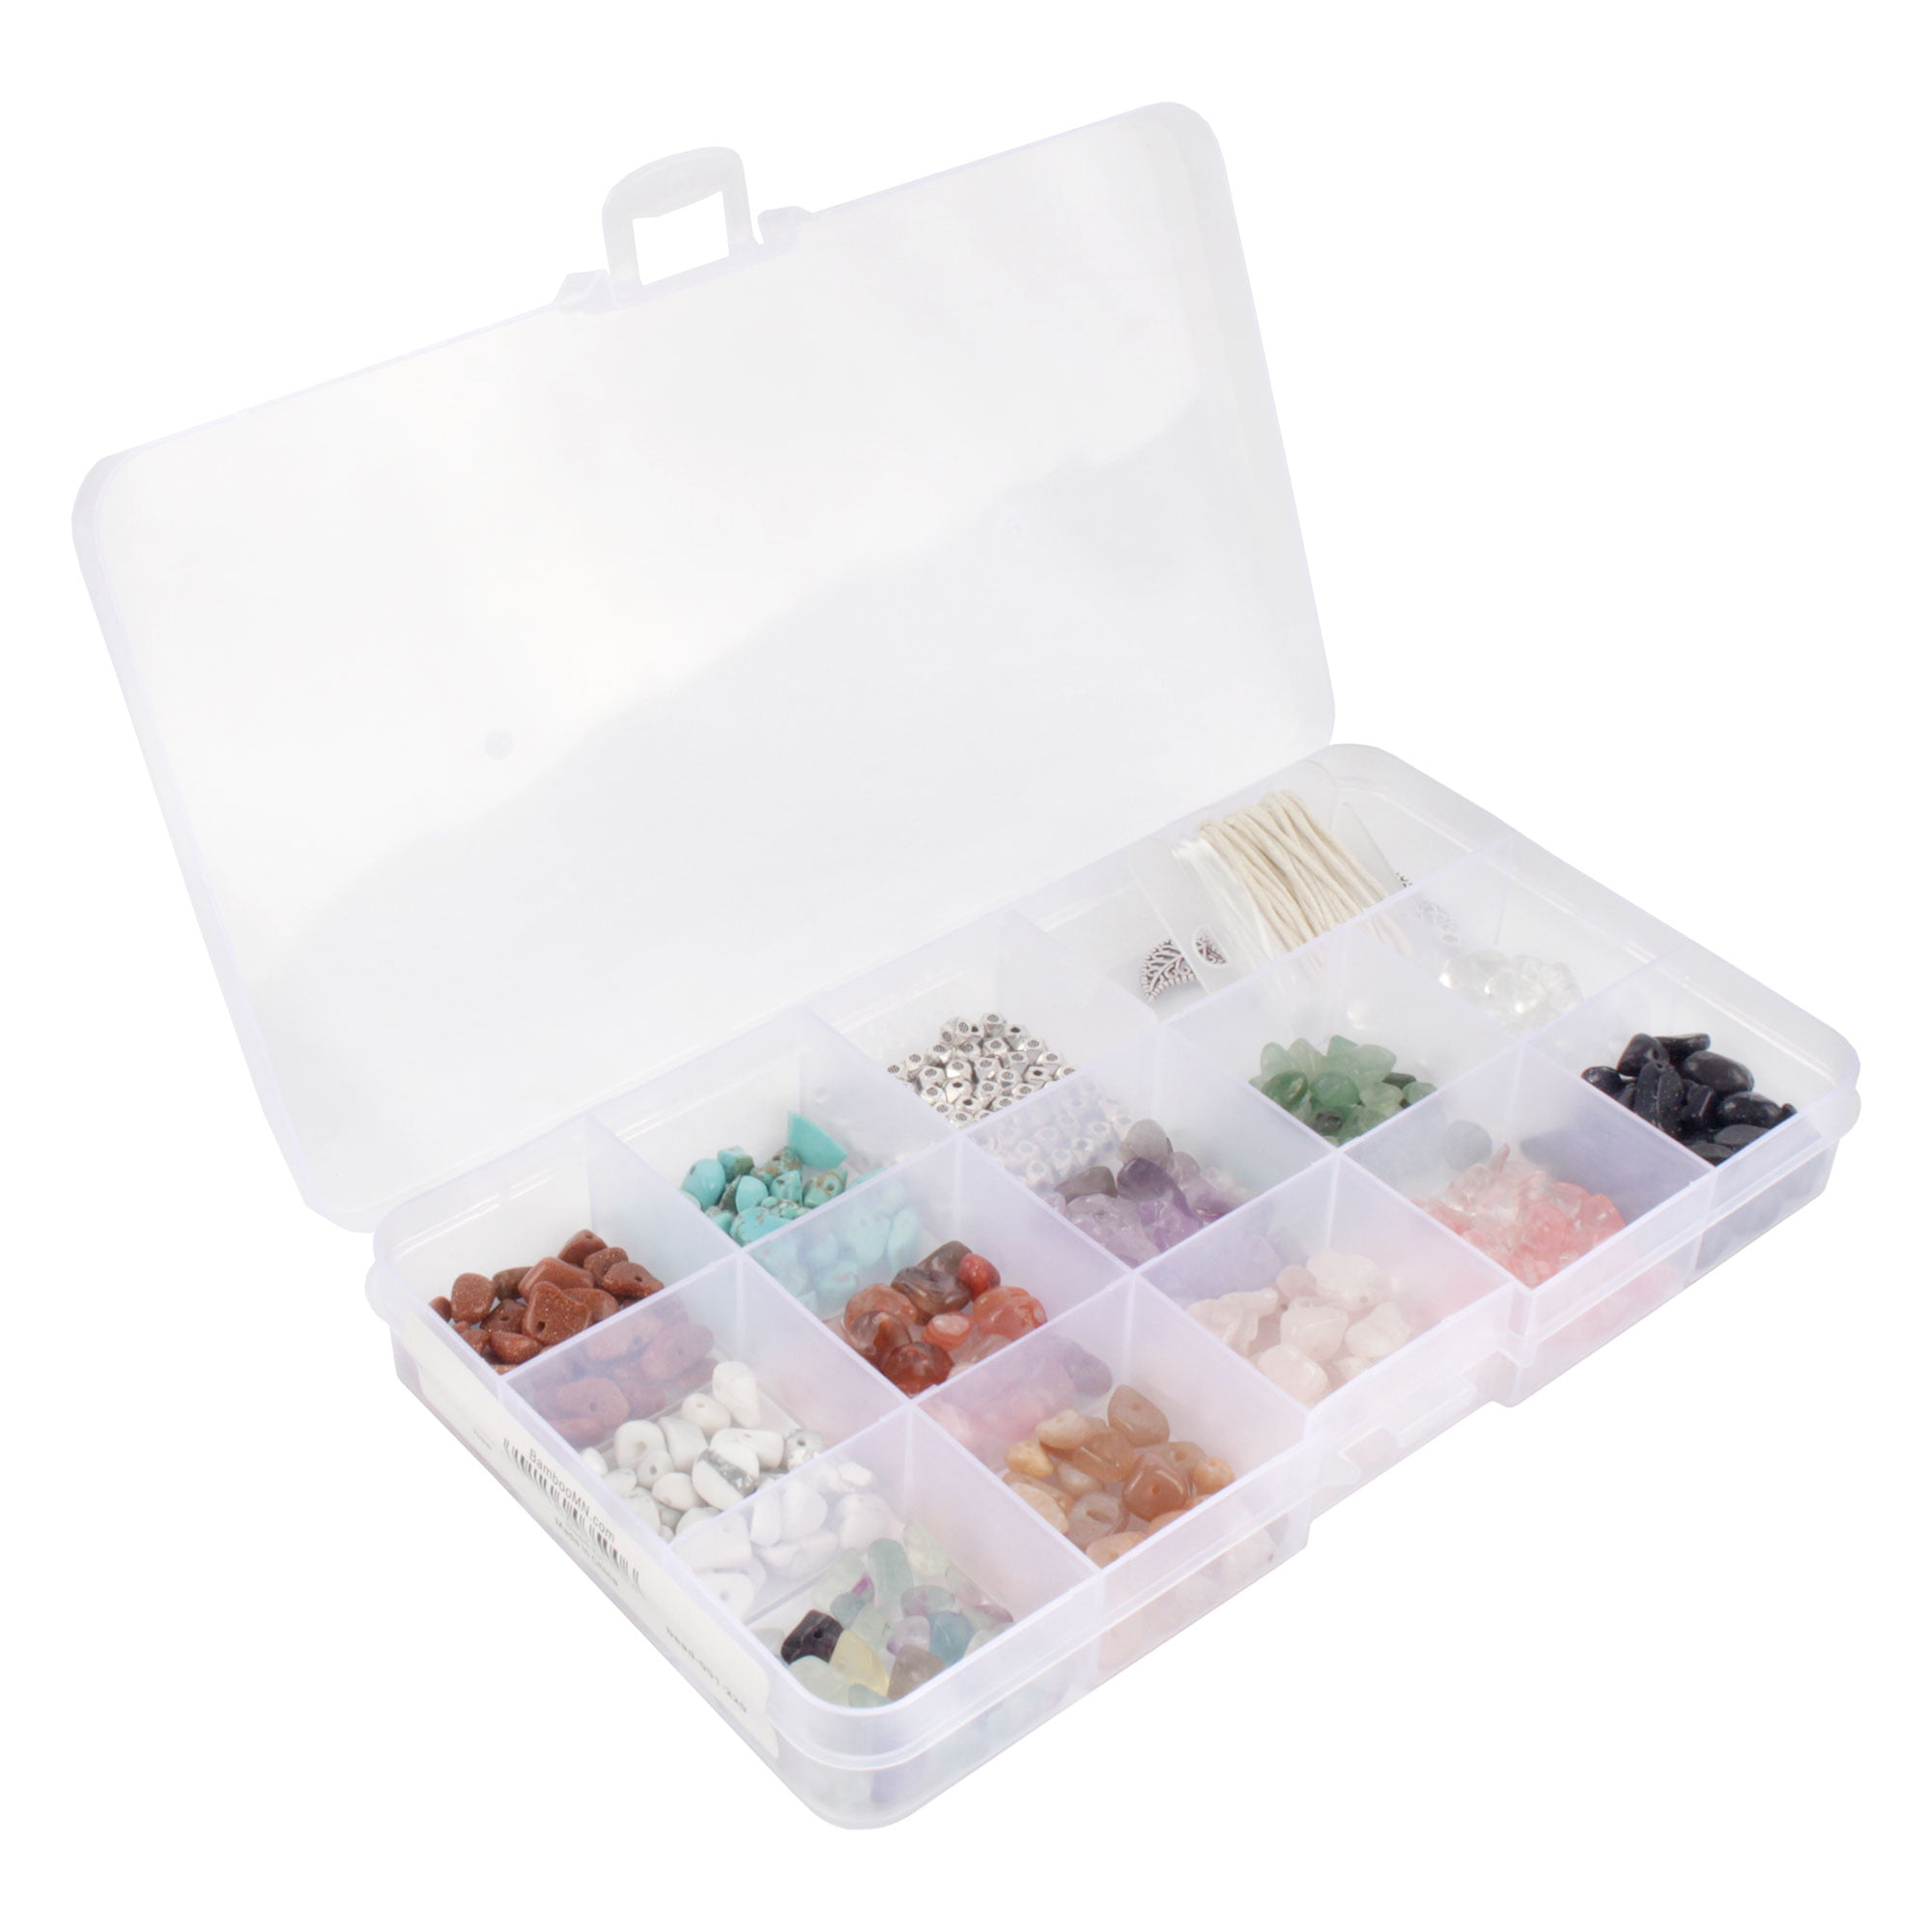 VILLCASE 200pcs Jewelry Beads Bead Bracelet Kit Beads for Jewelry